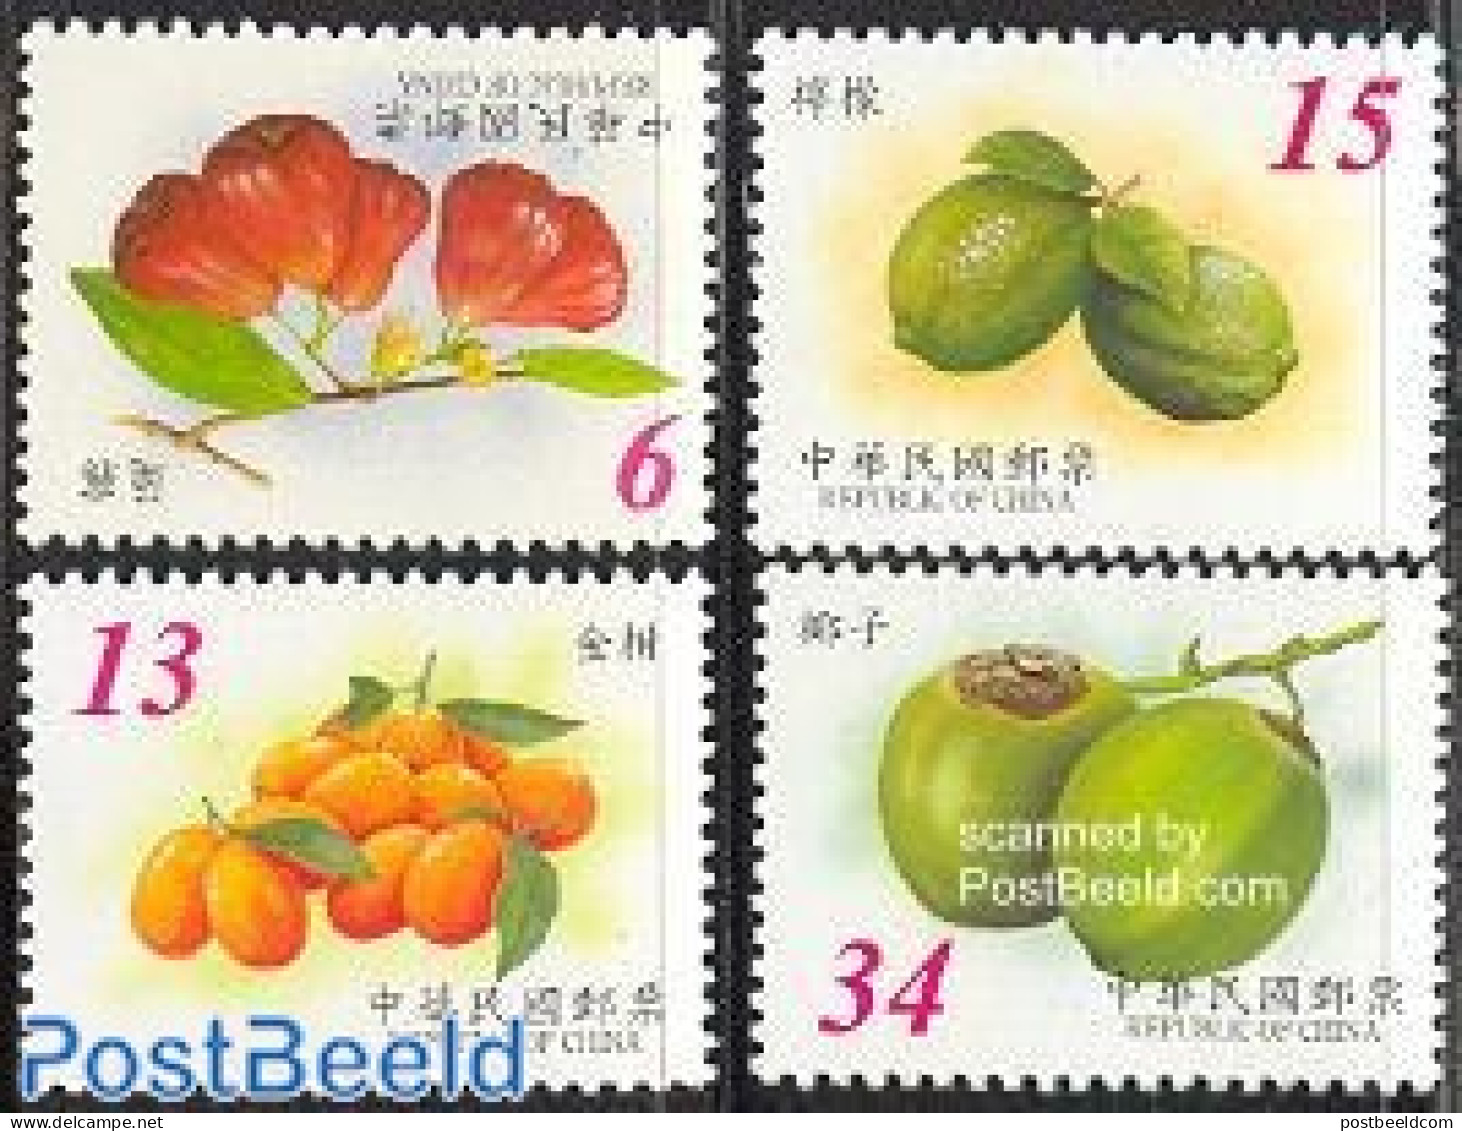 Taiwan 2003 Fruits 4v, Mint NH, Nature - Fruit - Fruits